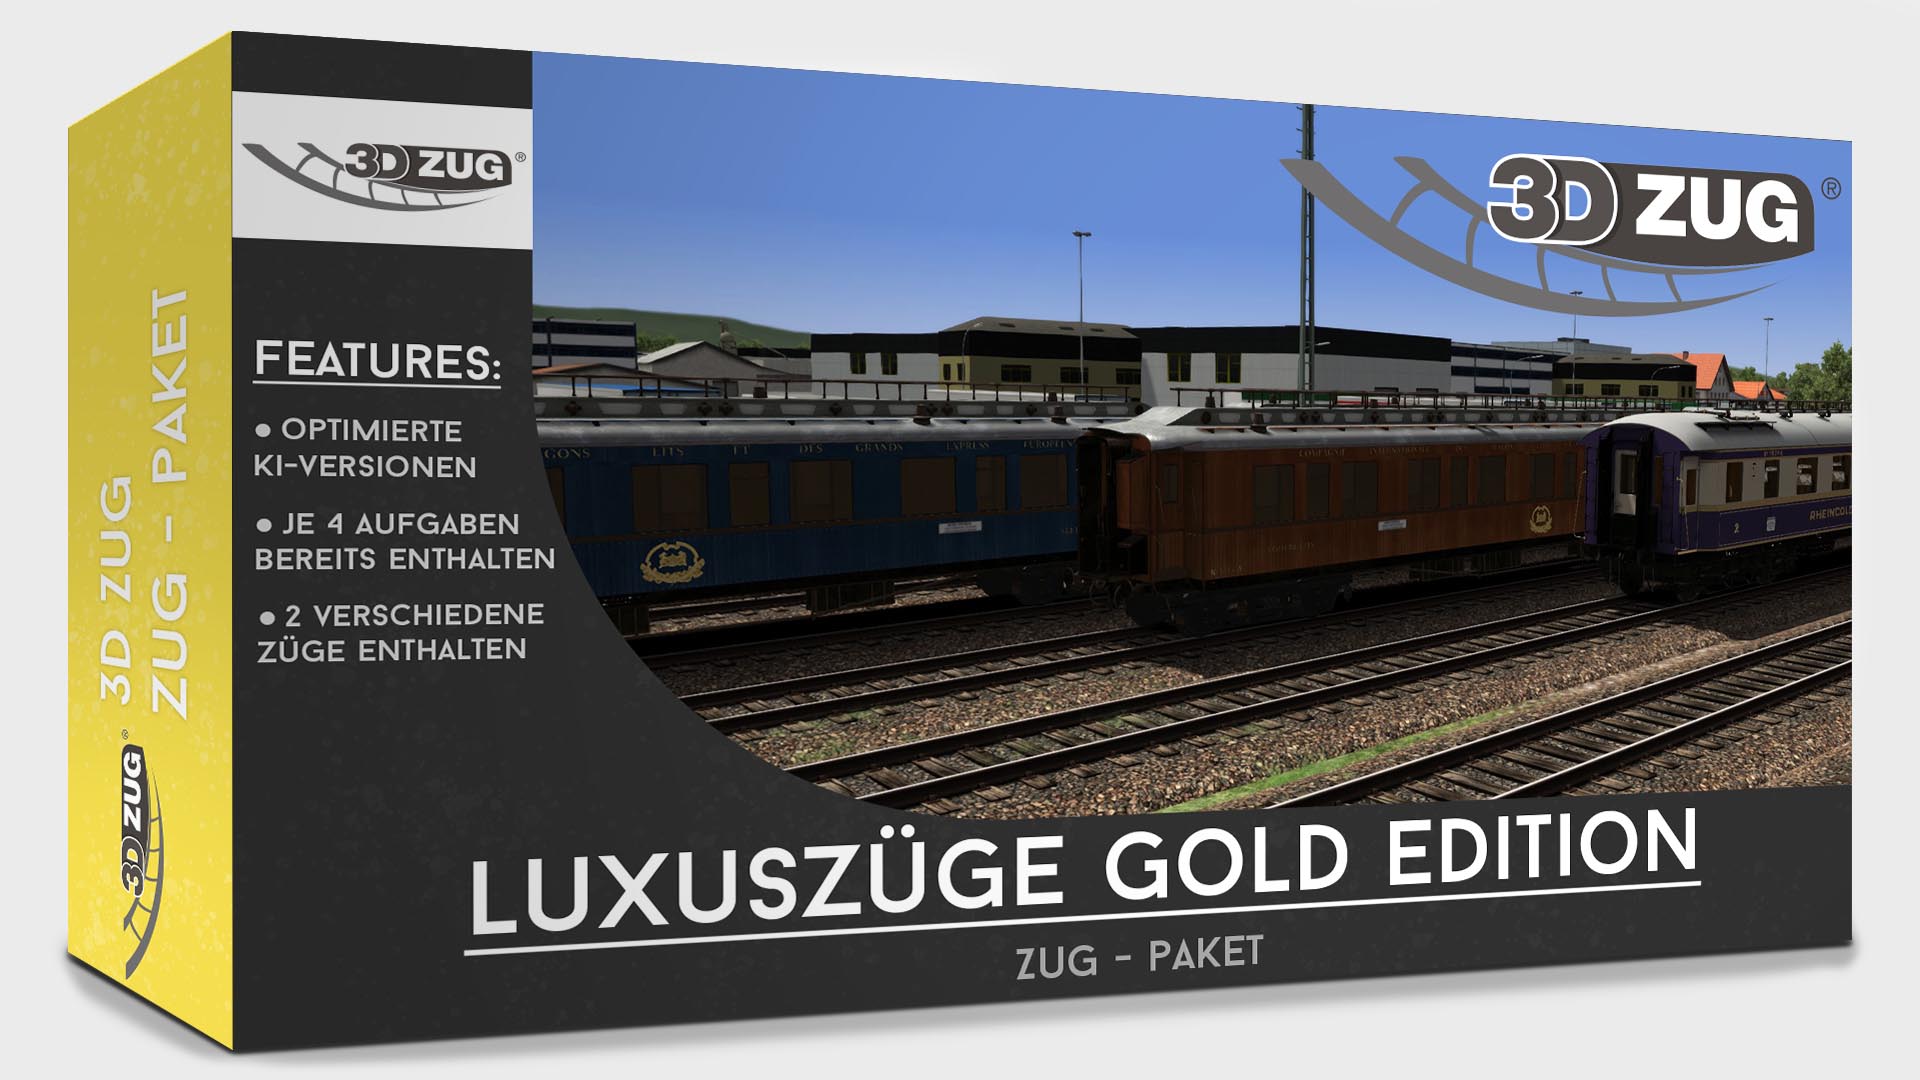 Luxury trains "Gold Edition"